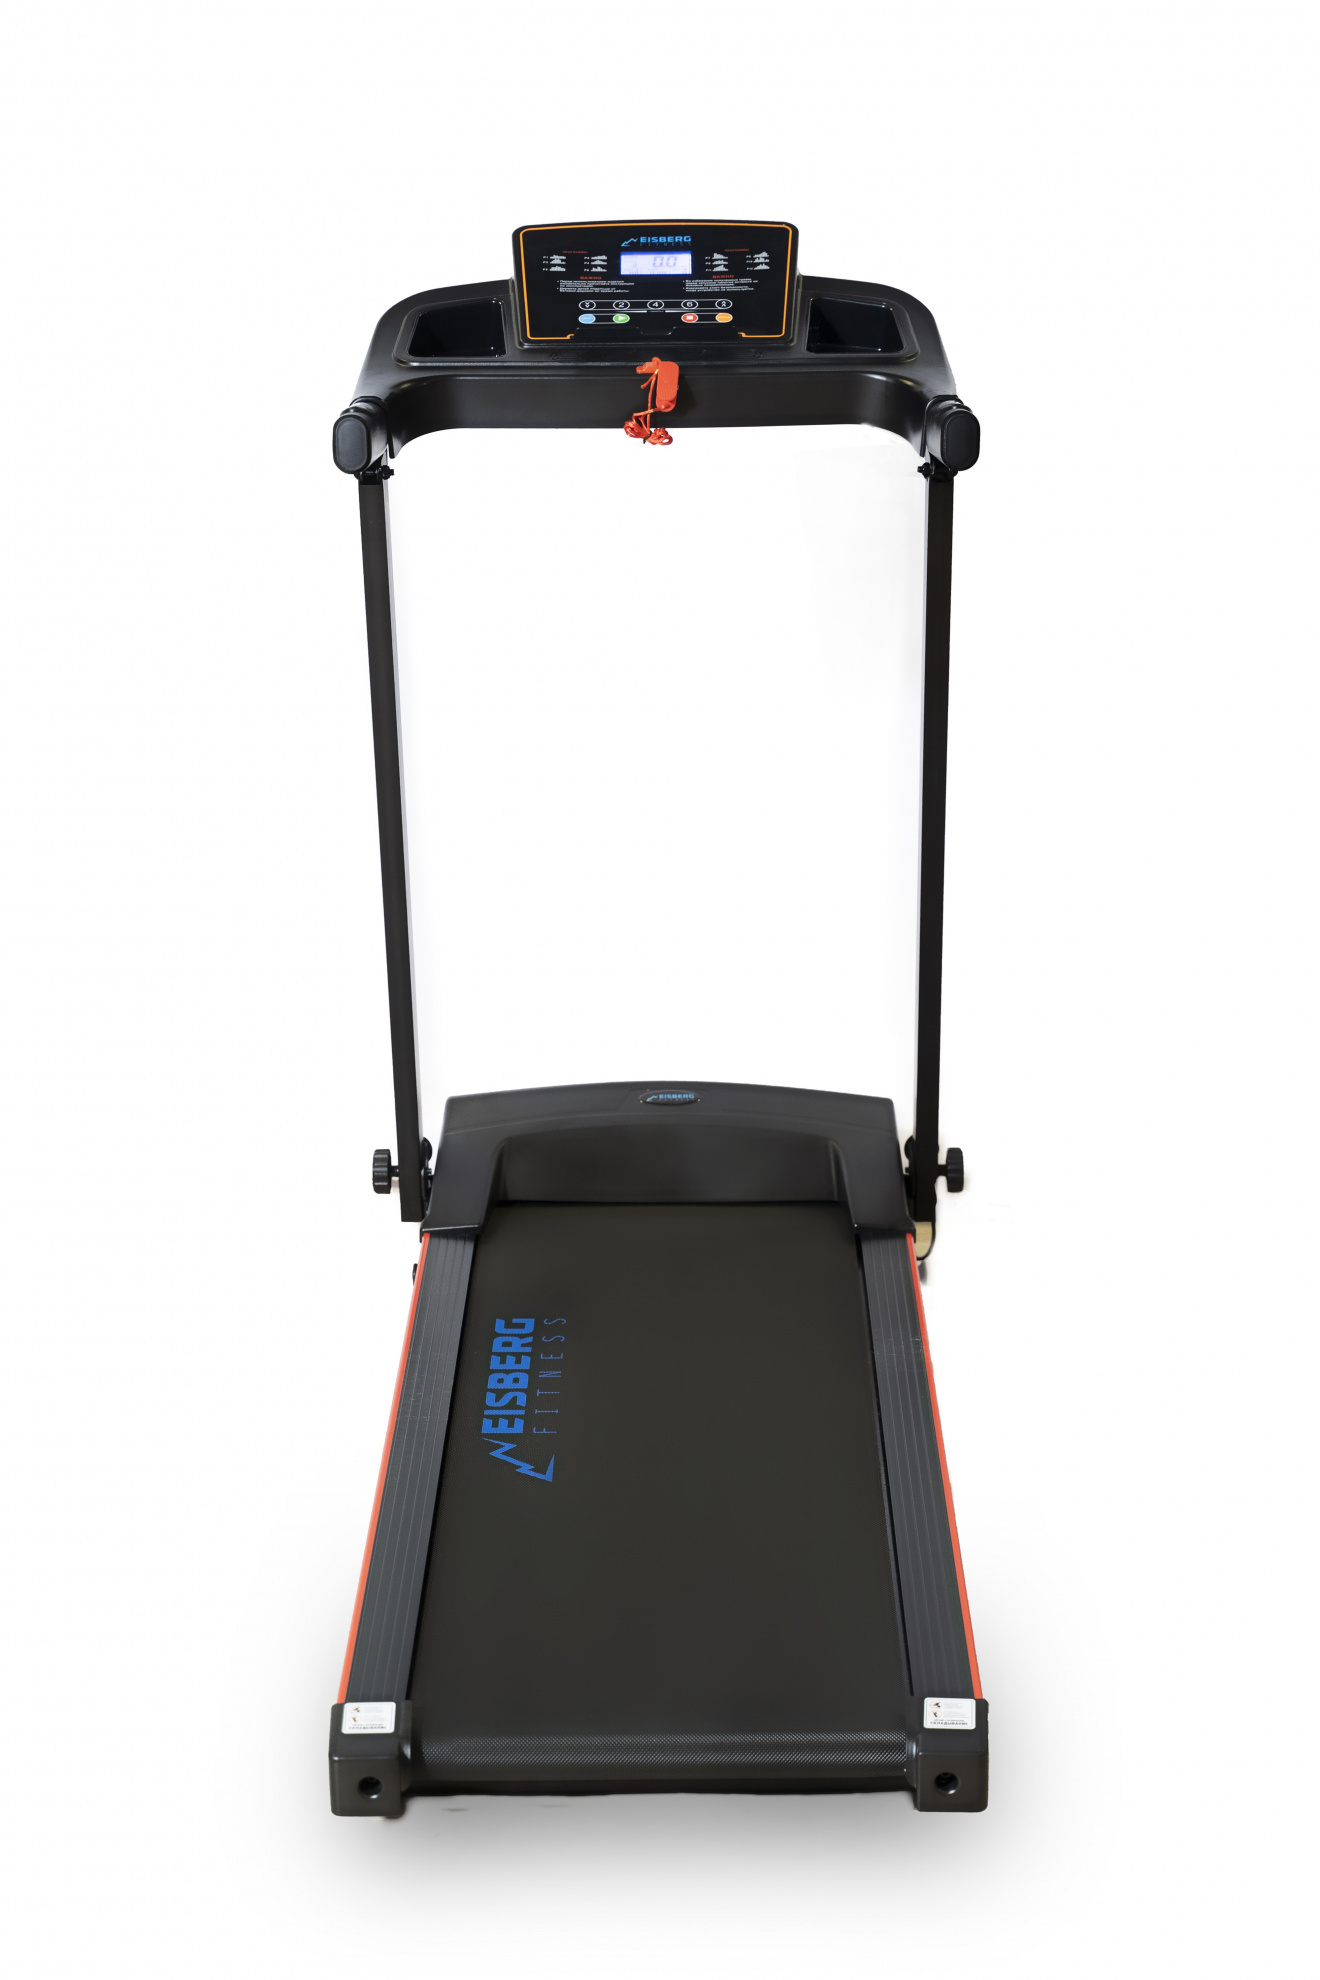 Eisberg Fitness C19A max вес пользователей: 100 кг